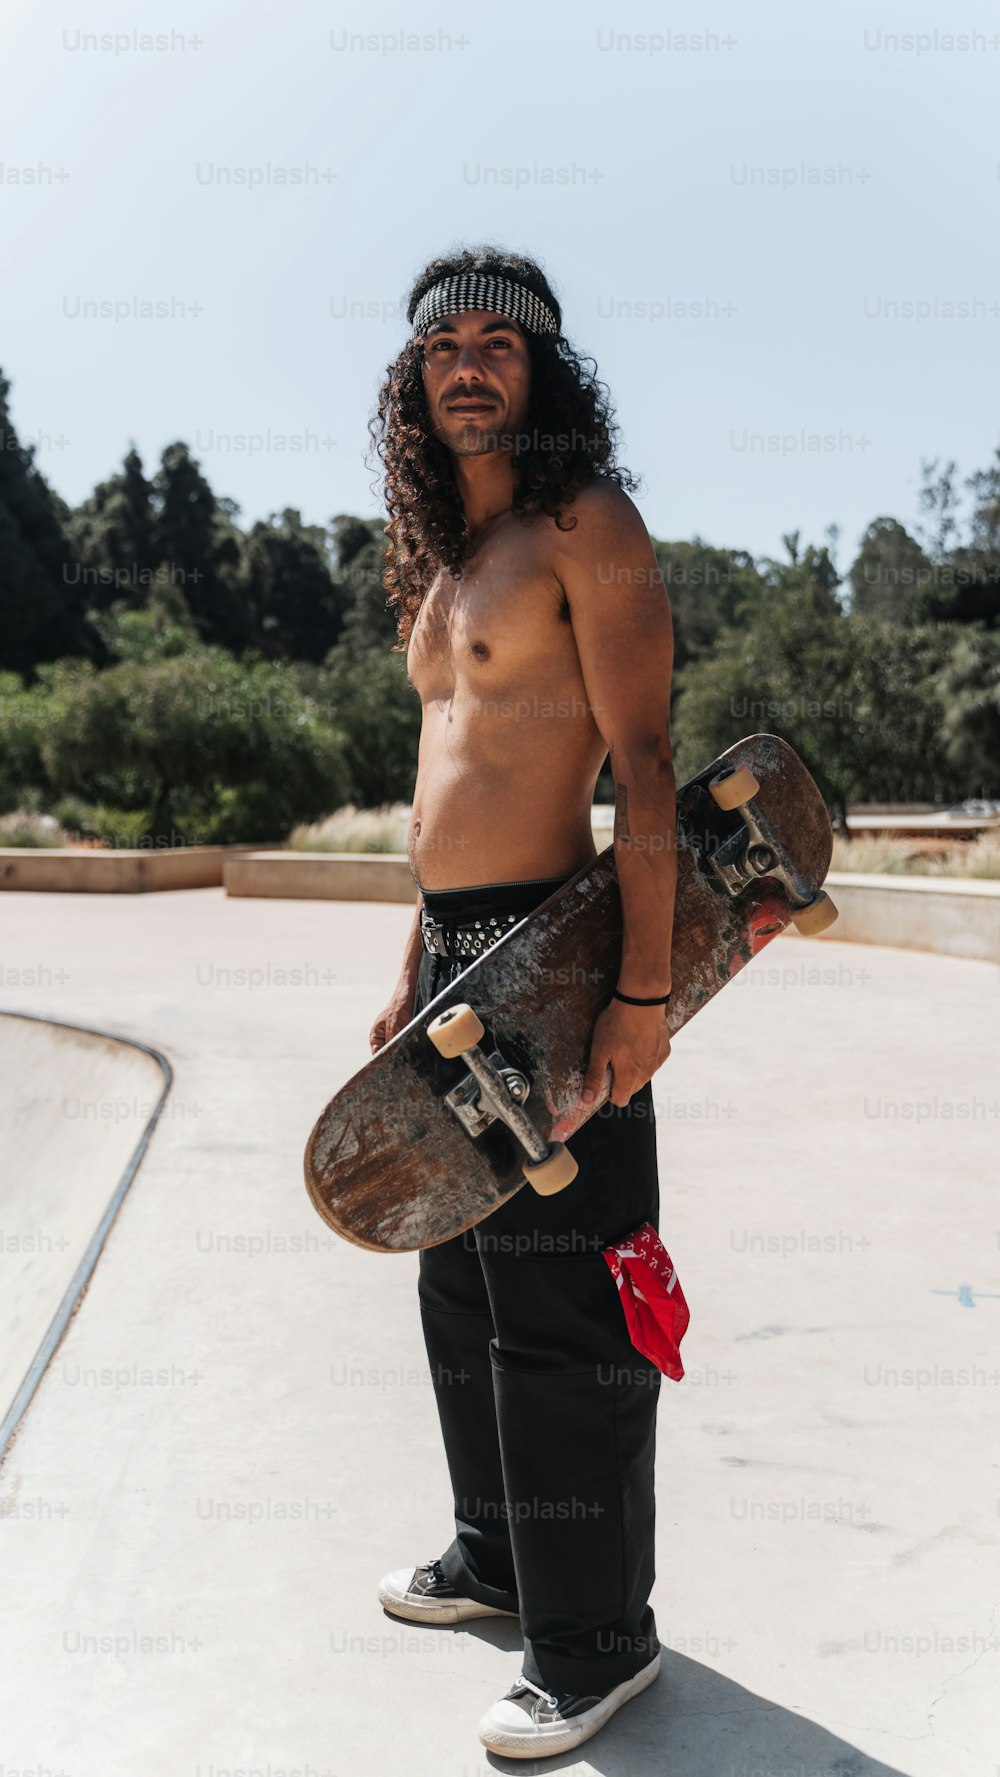 a man with long hair holding a skateboard